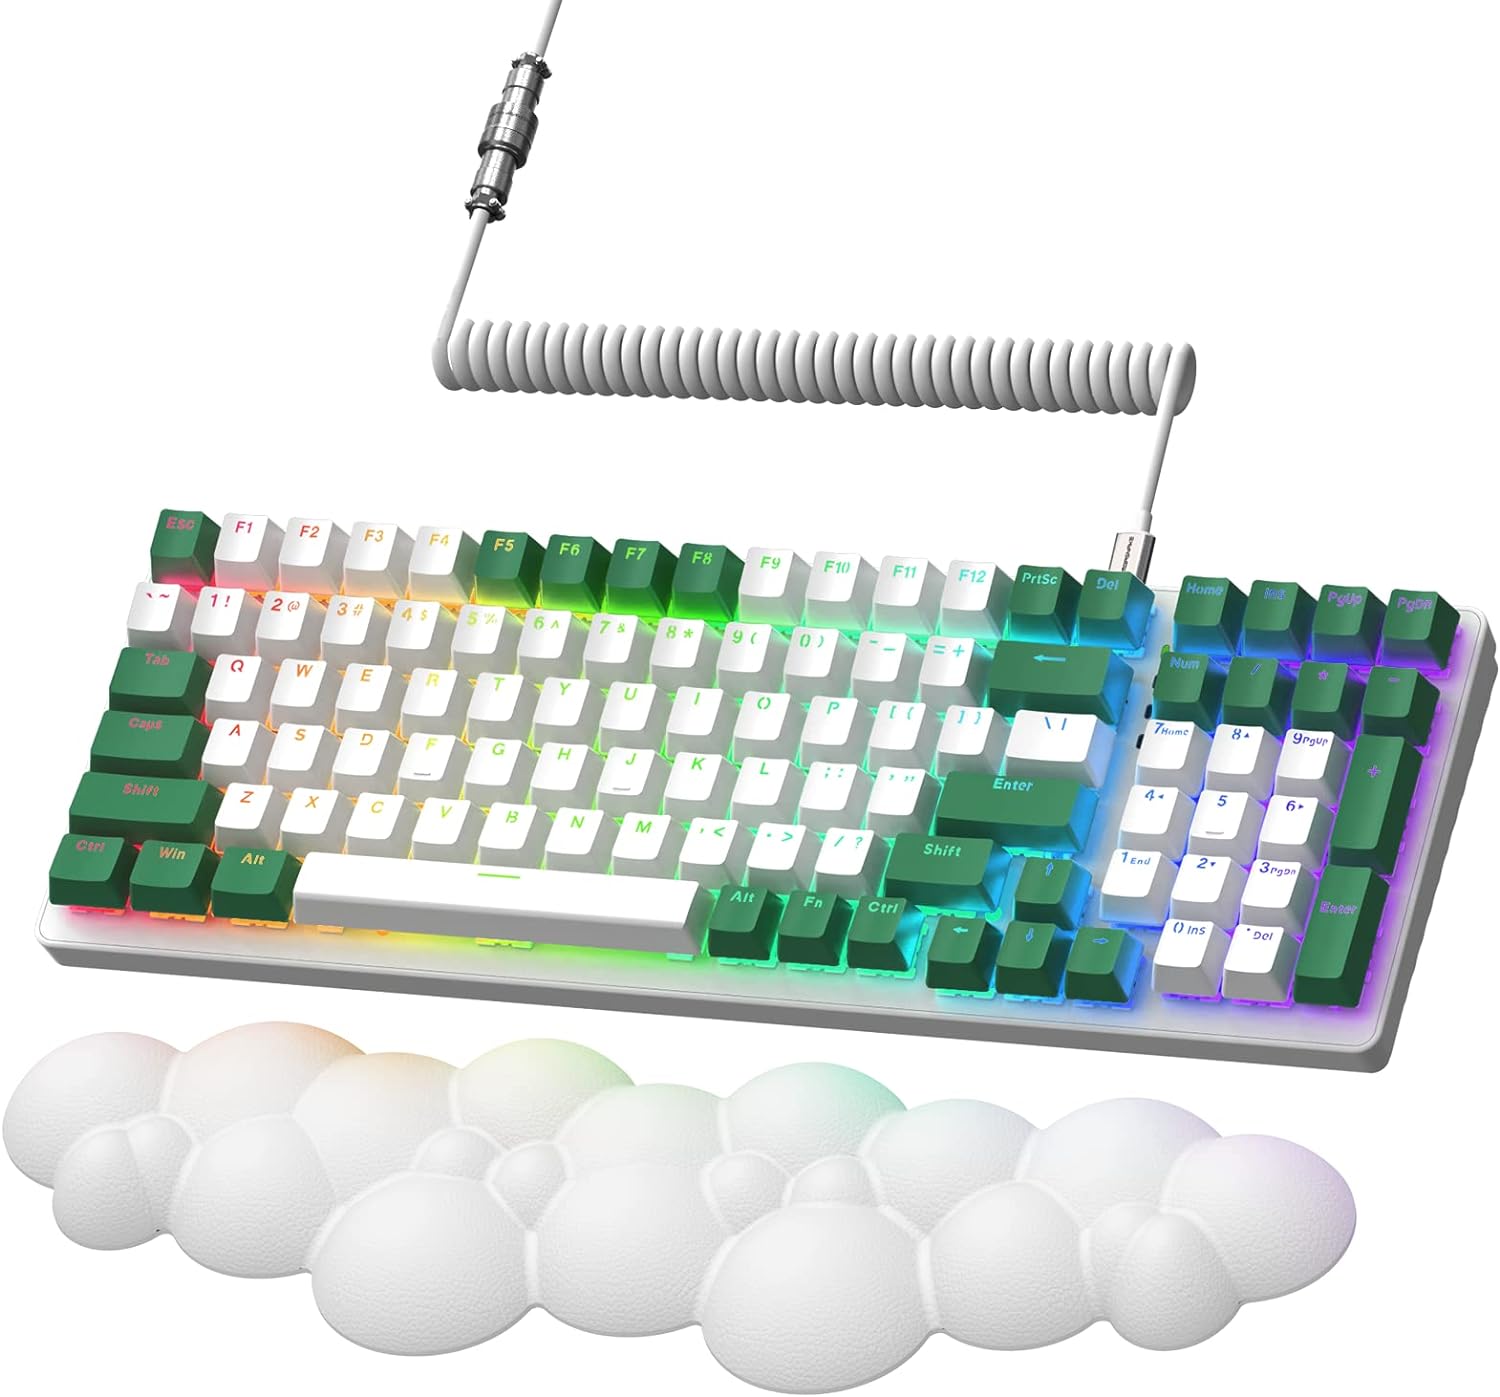 Wireless Full-sized Mechanical Gaming Keyboard